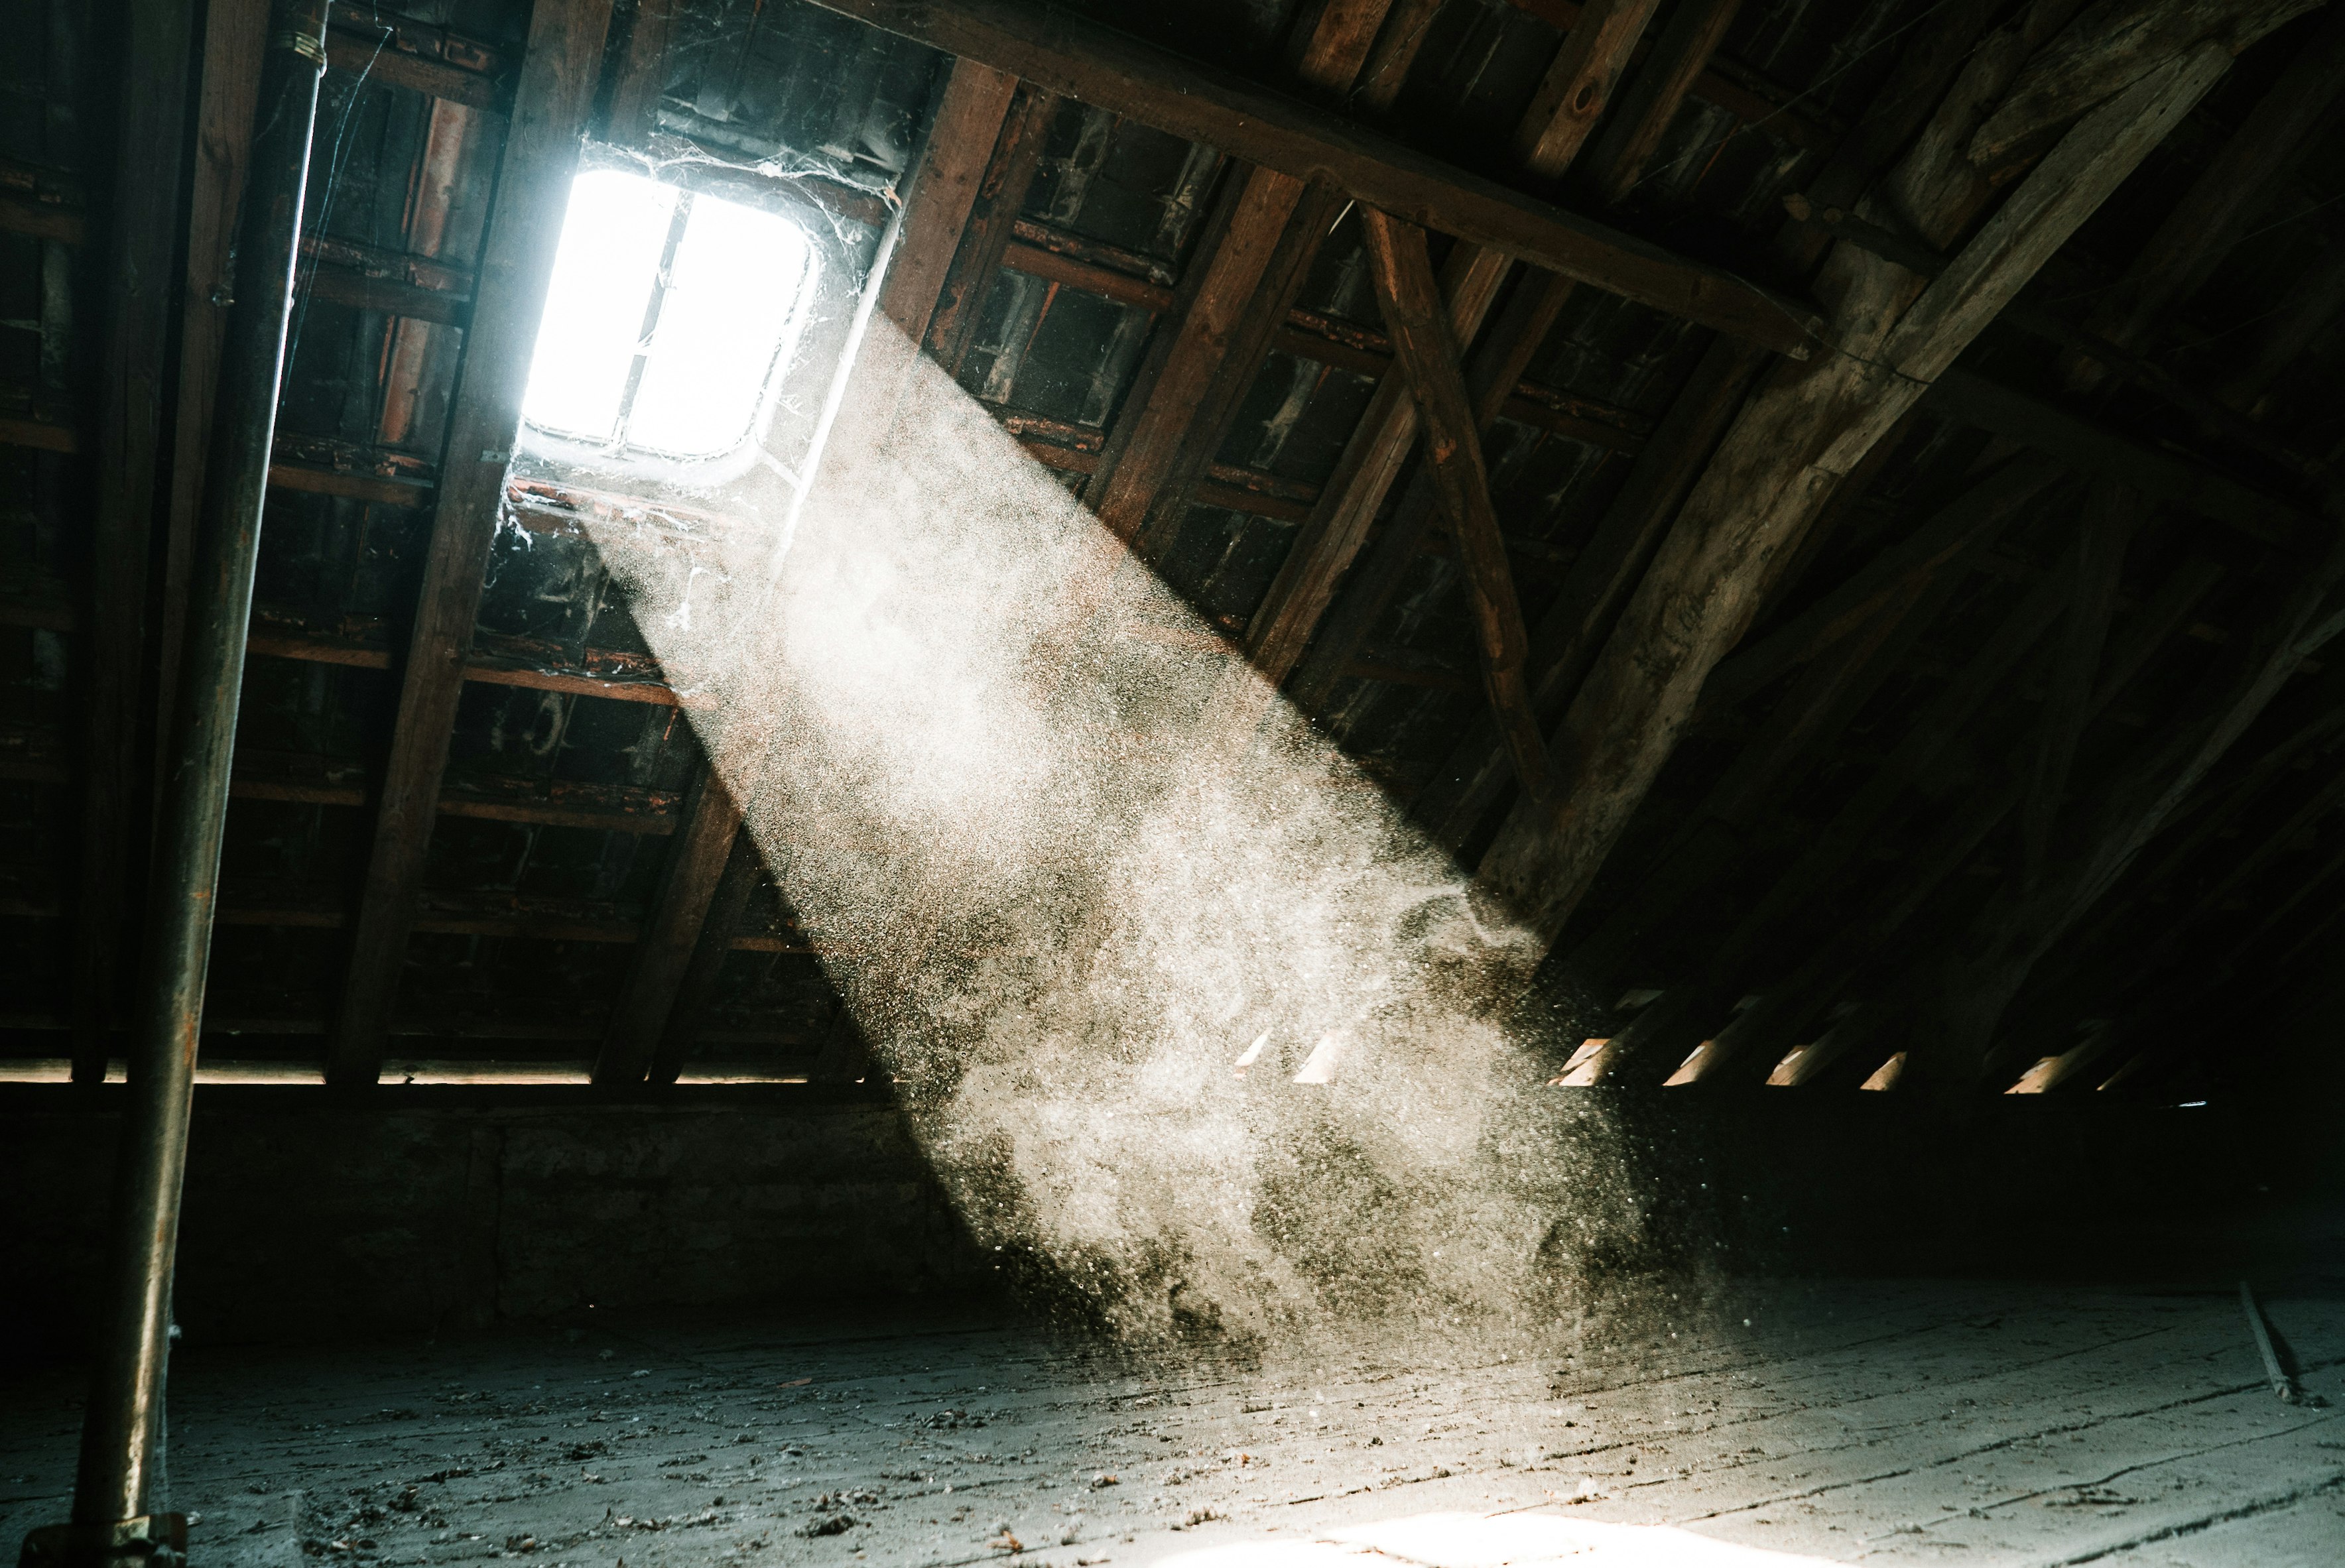 A dusty attic/loft space